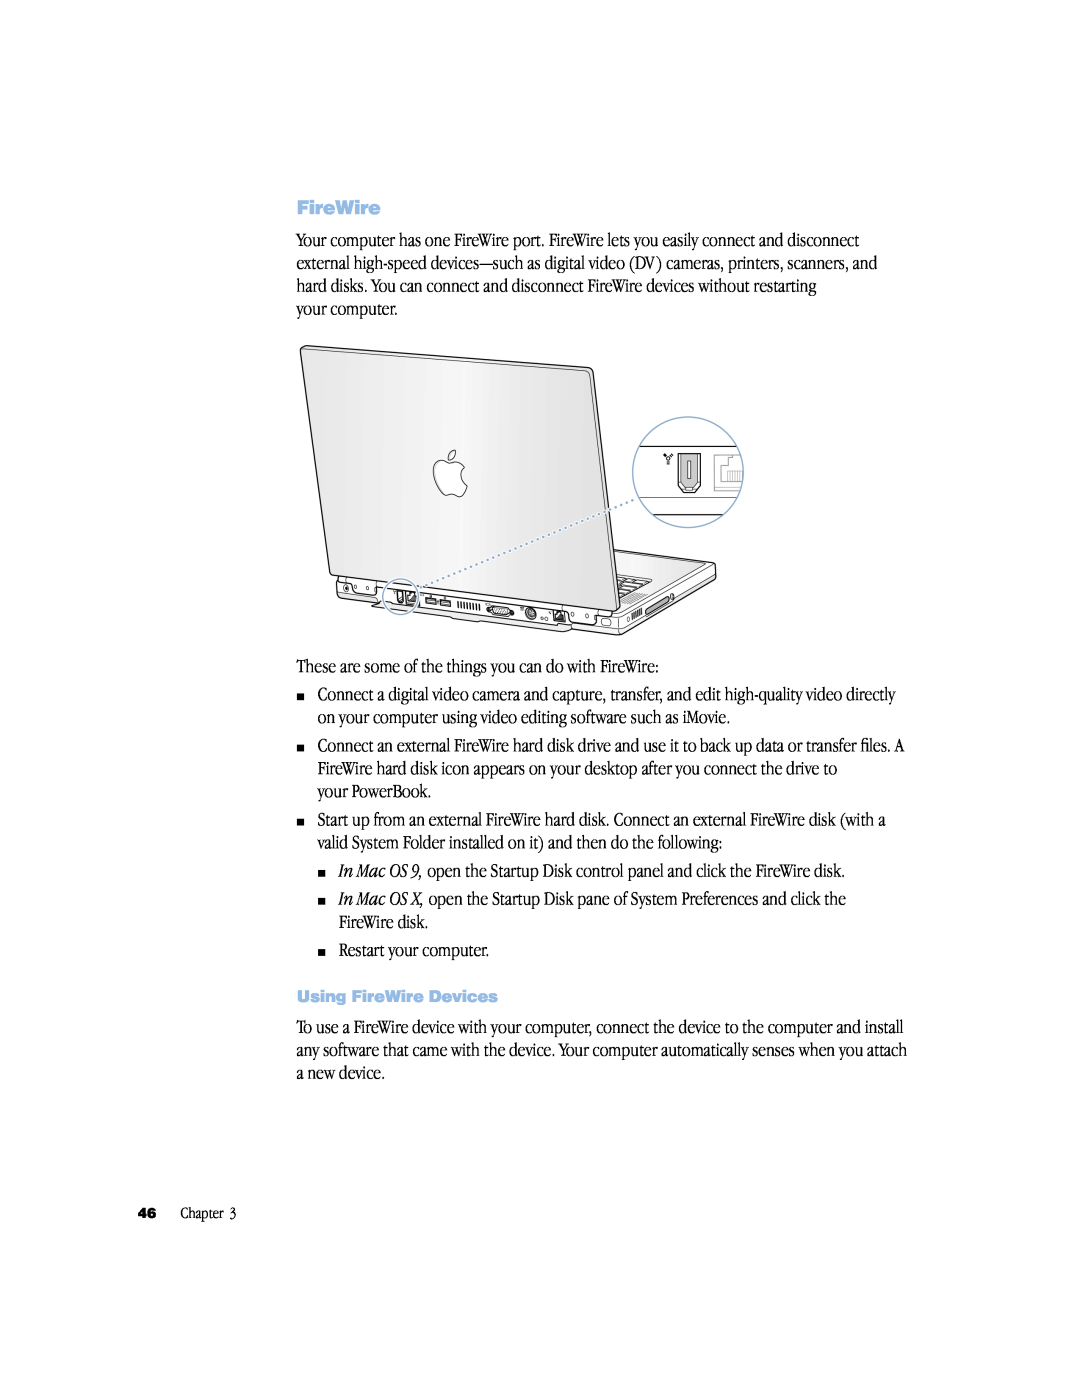 Apple powerbook g4 manual FireWire 